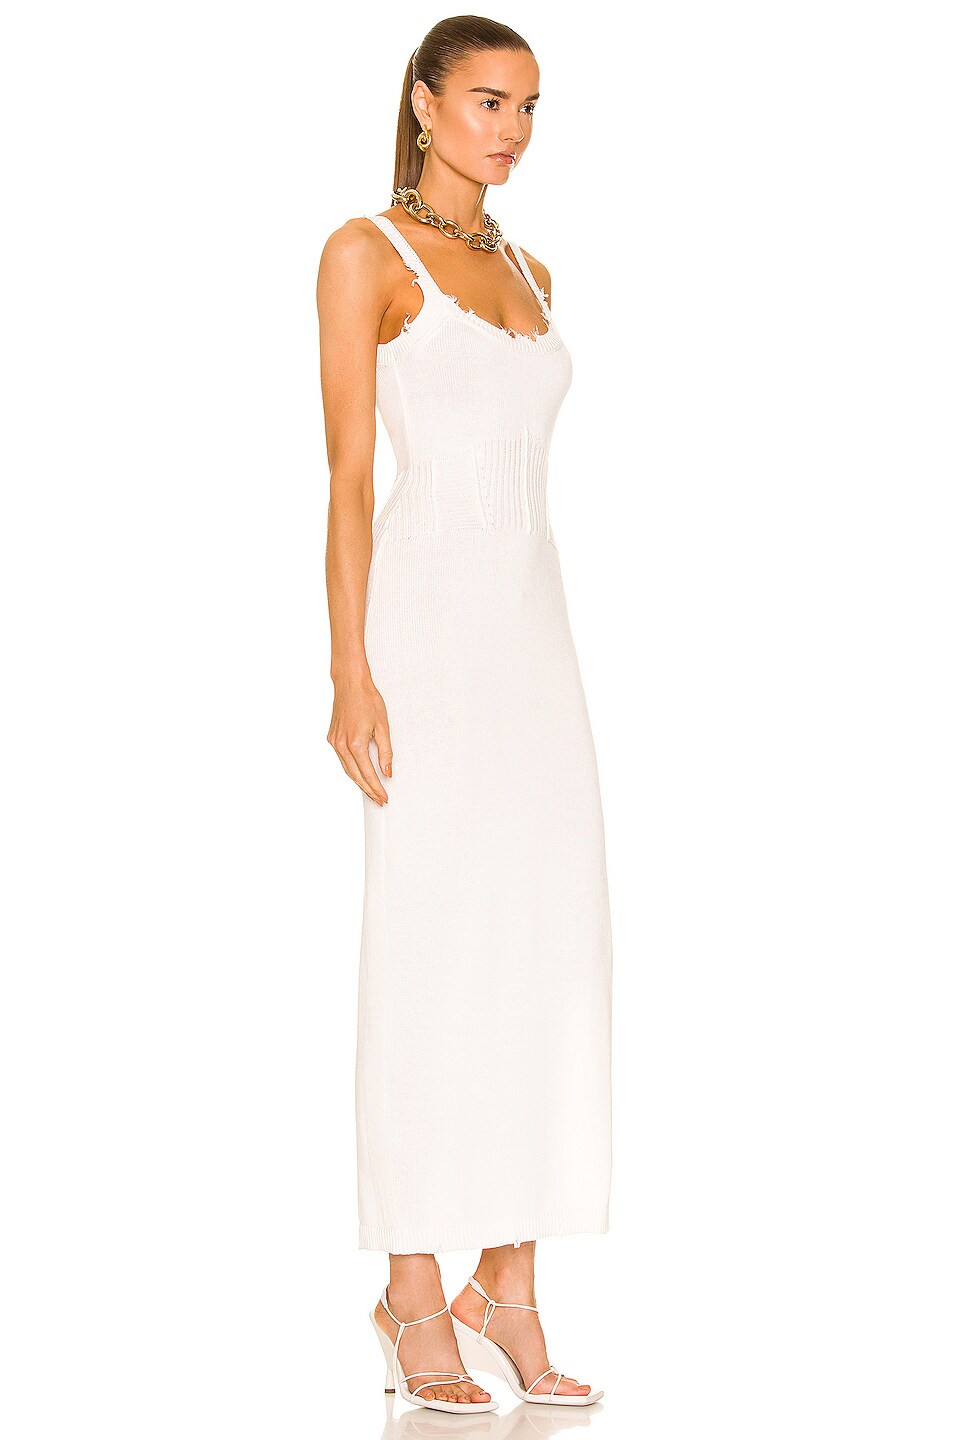 SER.O.YA Gabby Maxi Dress in White | FWRD